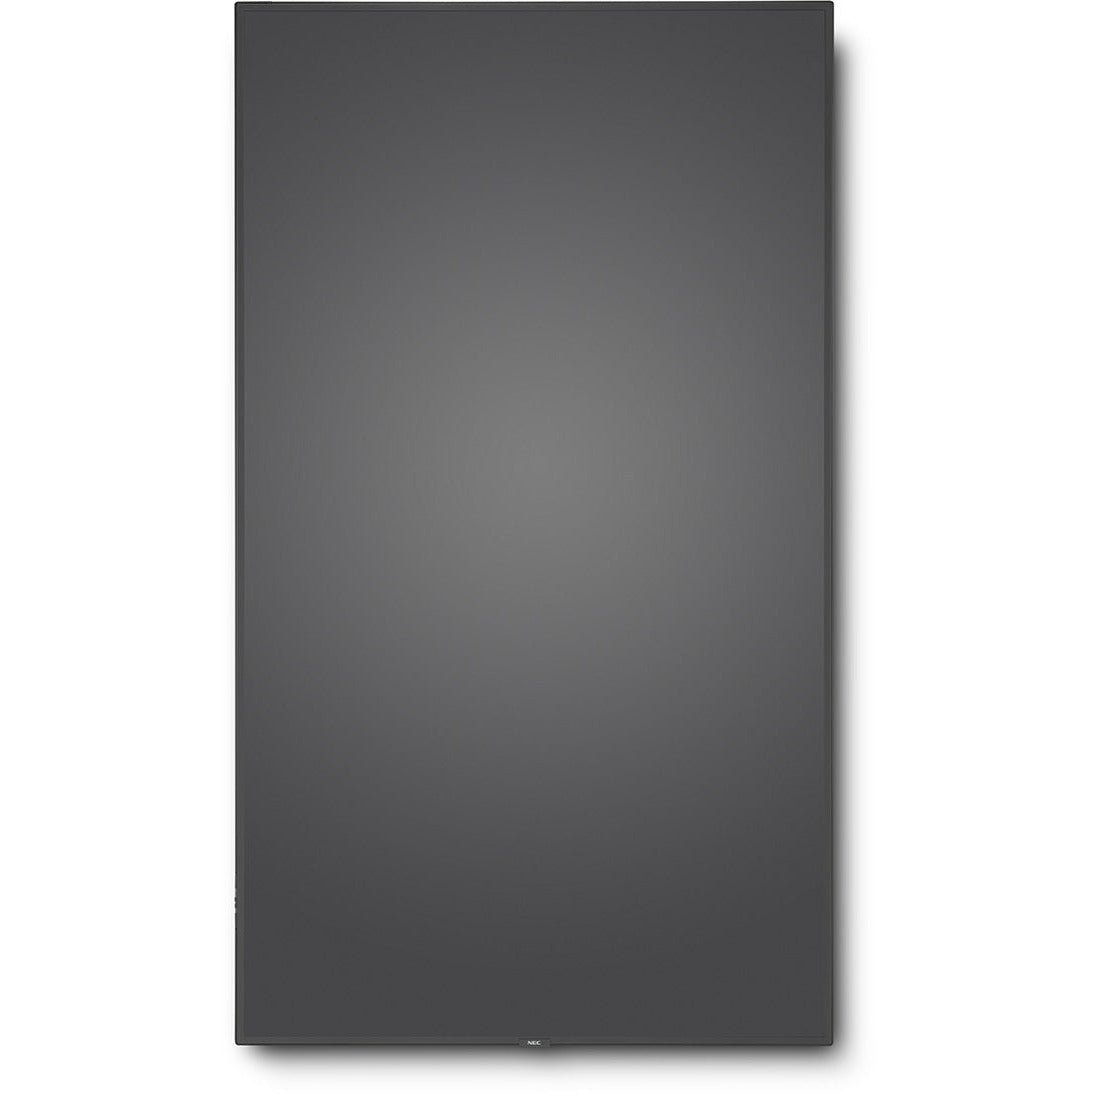 NEC MultiSync® P754Q LCD 75" Professional Large Format Display